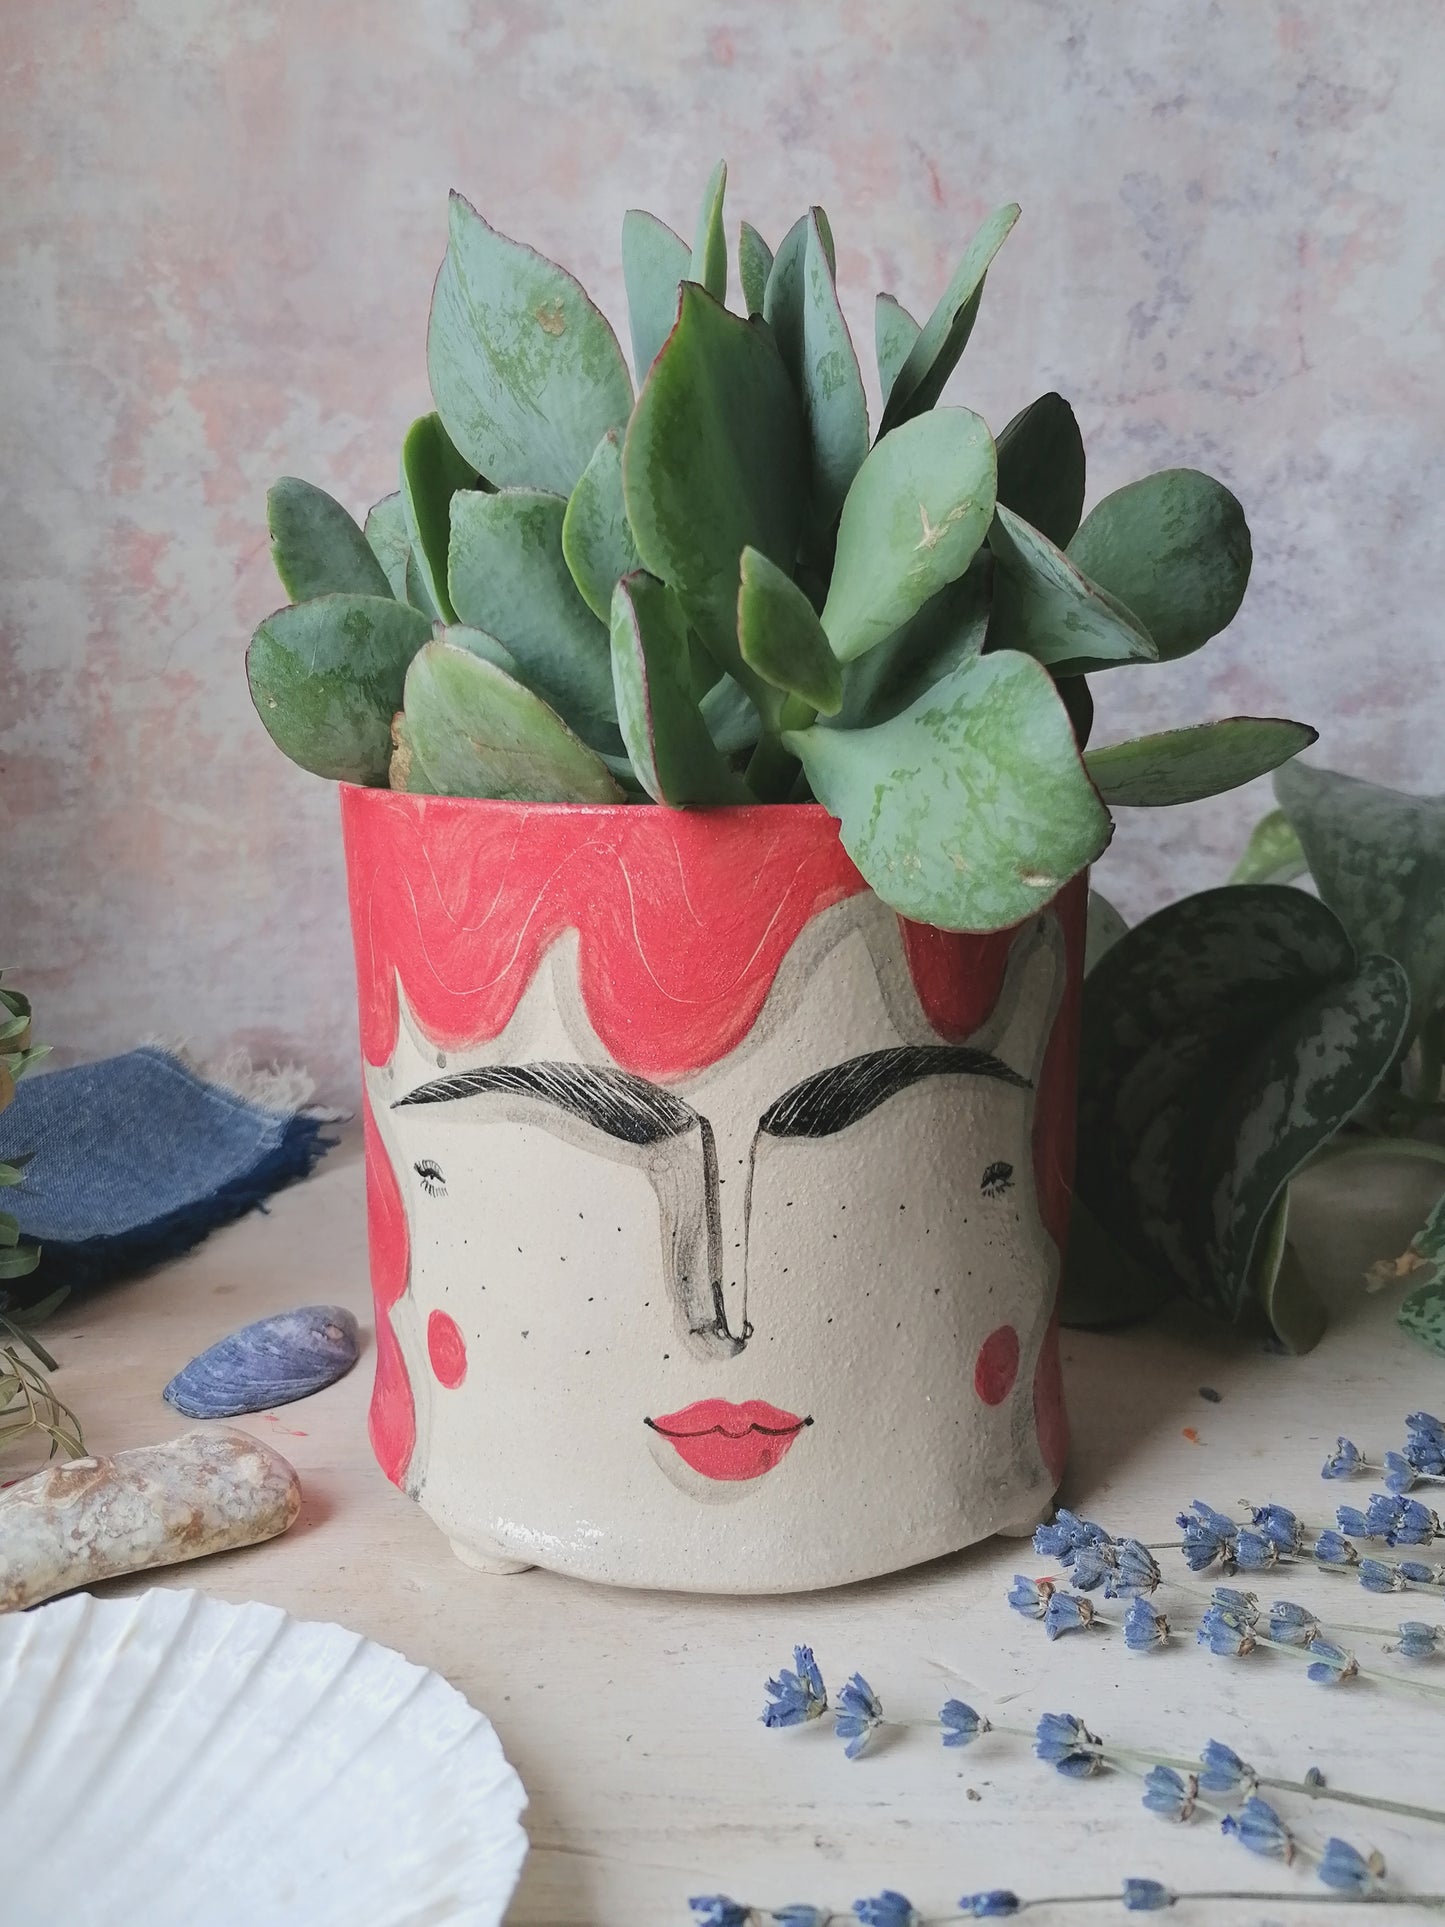 Pertunia the handmade ceramic plant pot